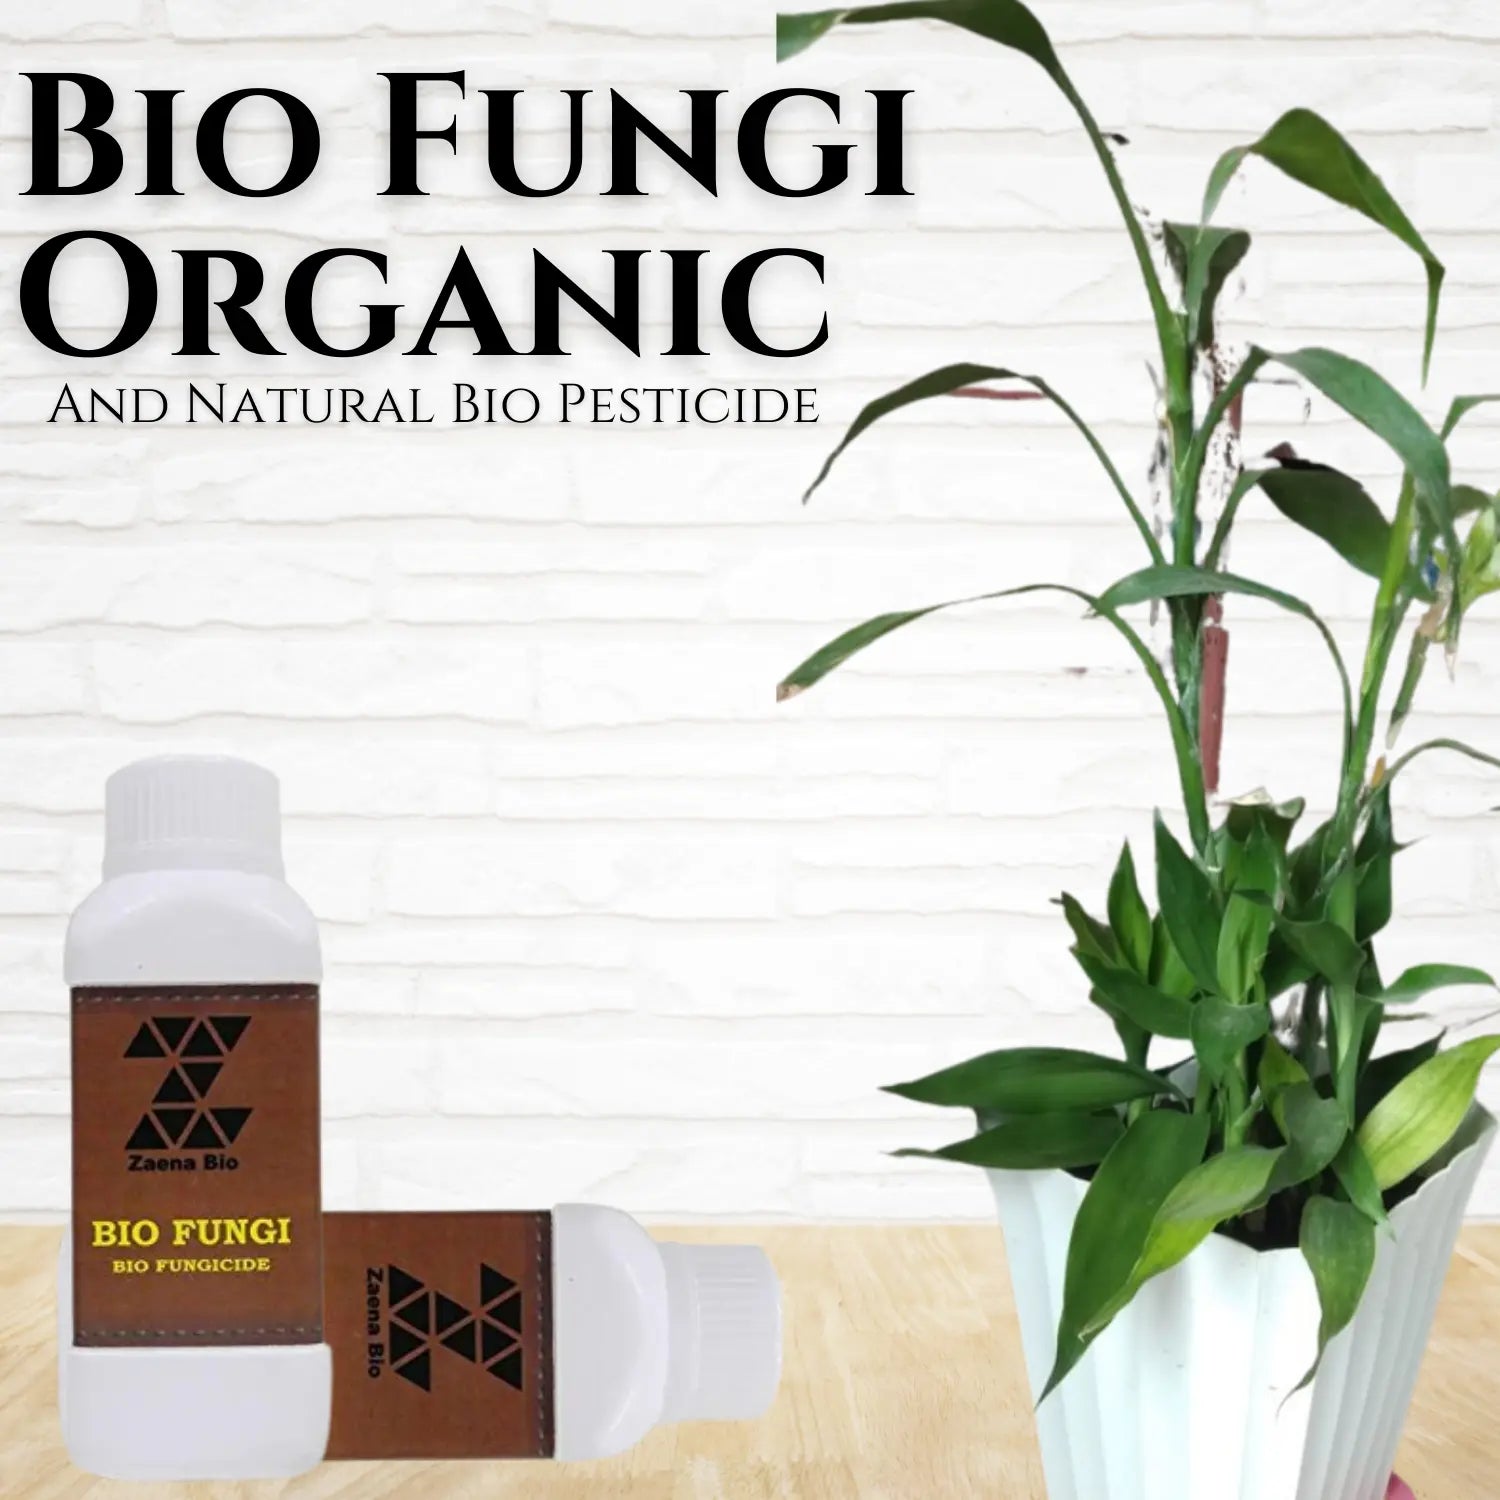 Bio Fungi Organic and Natural Bio Pesticide